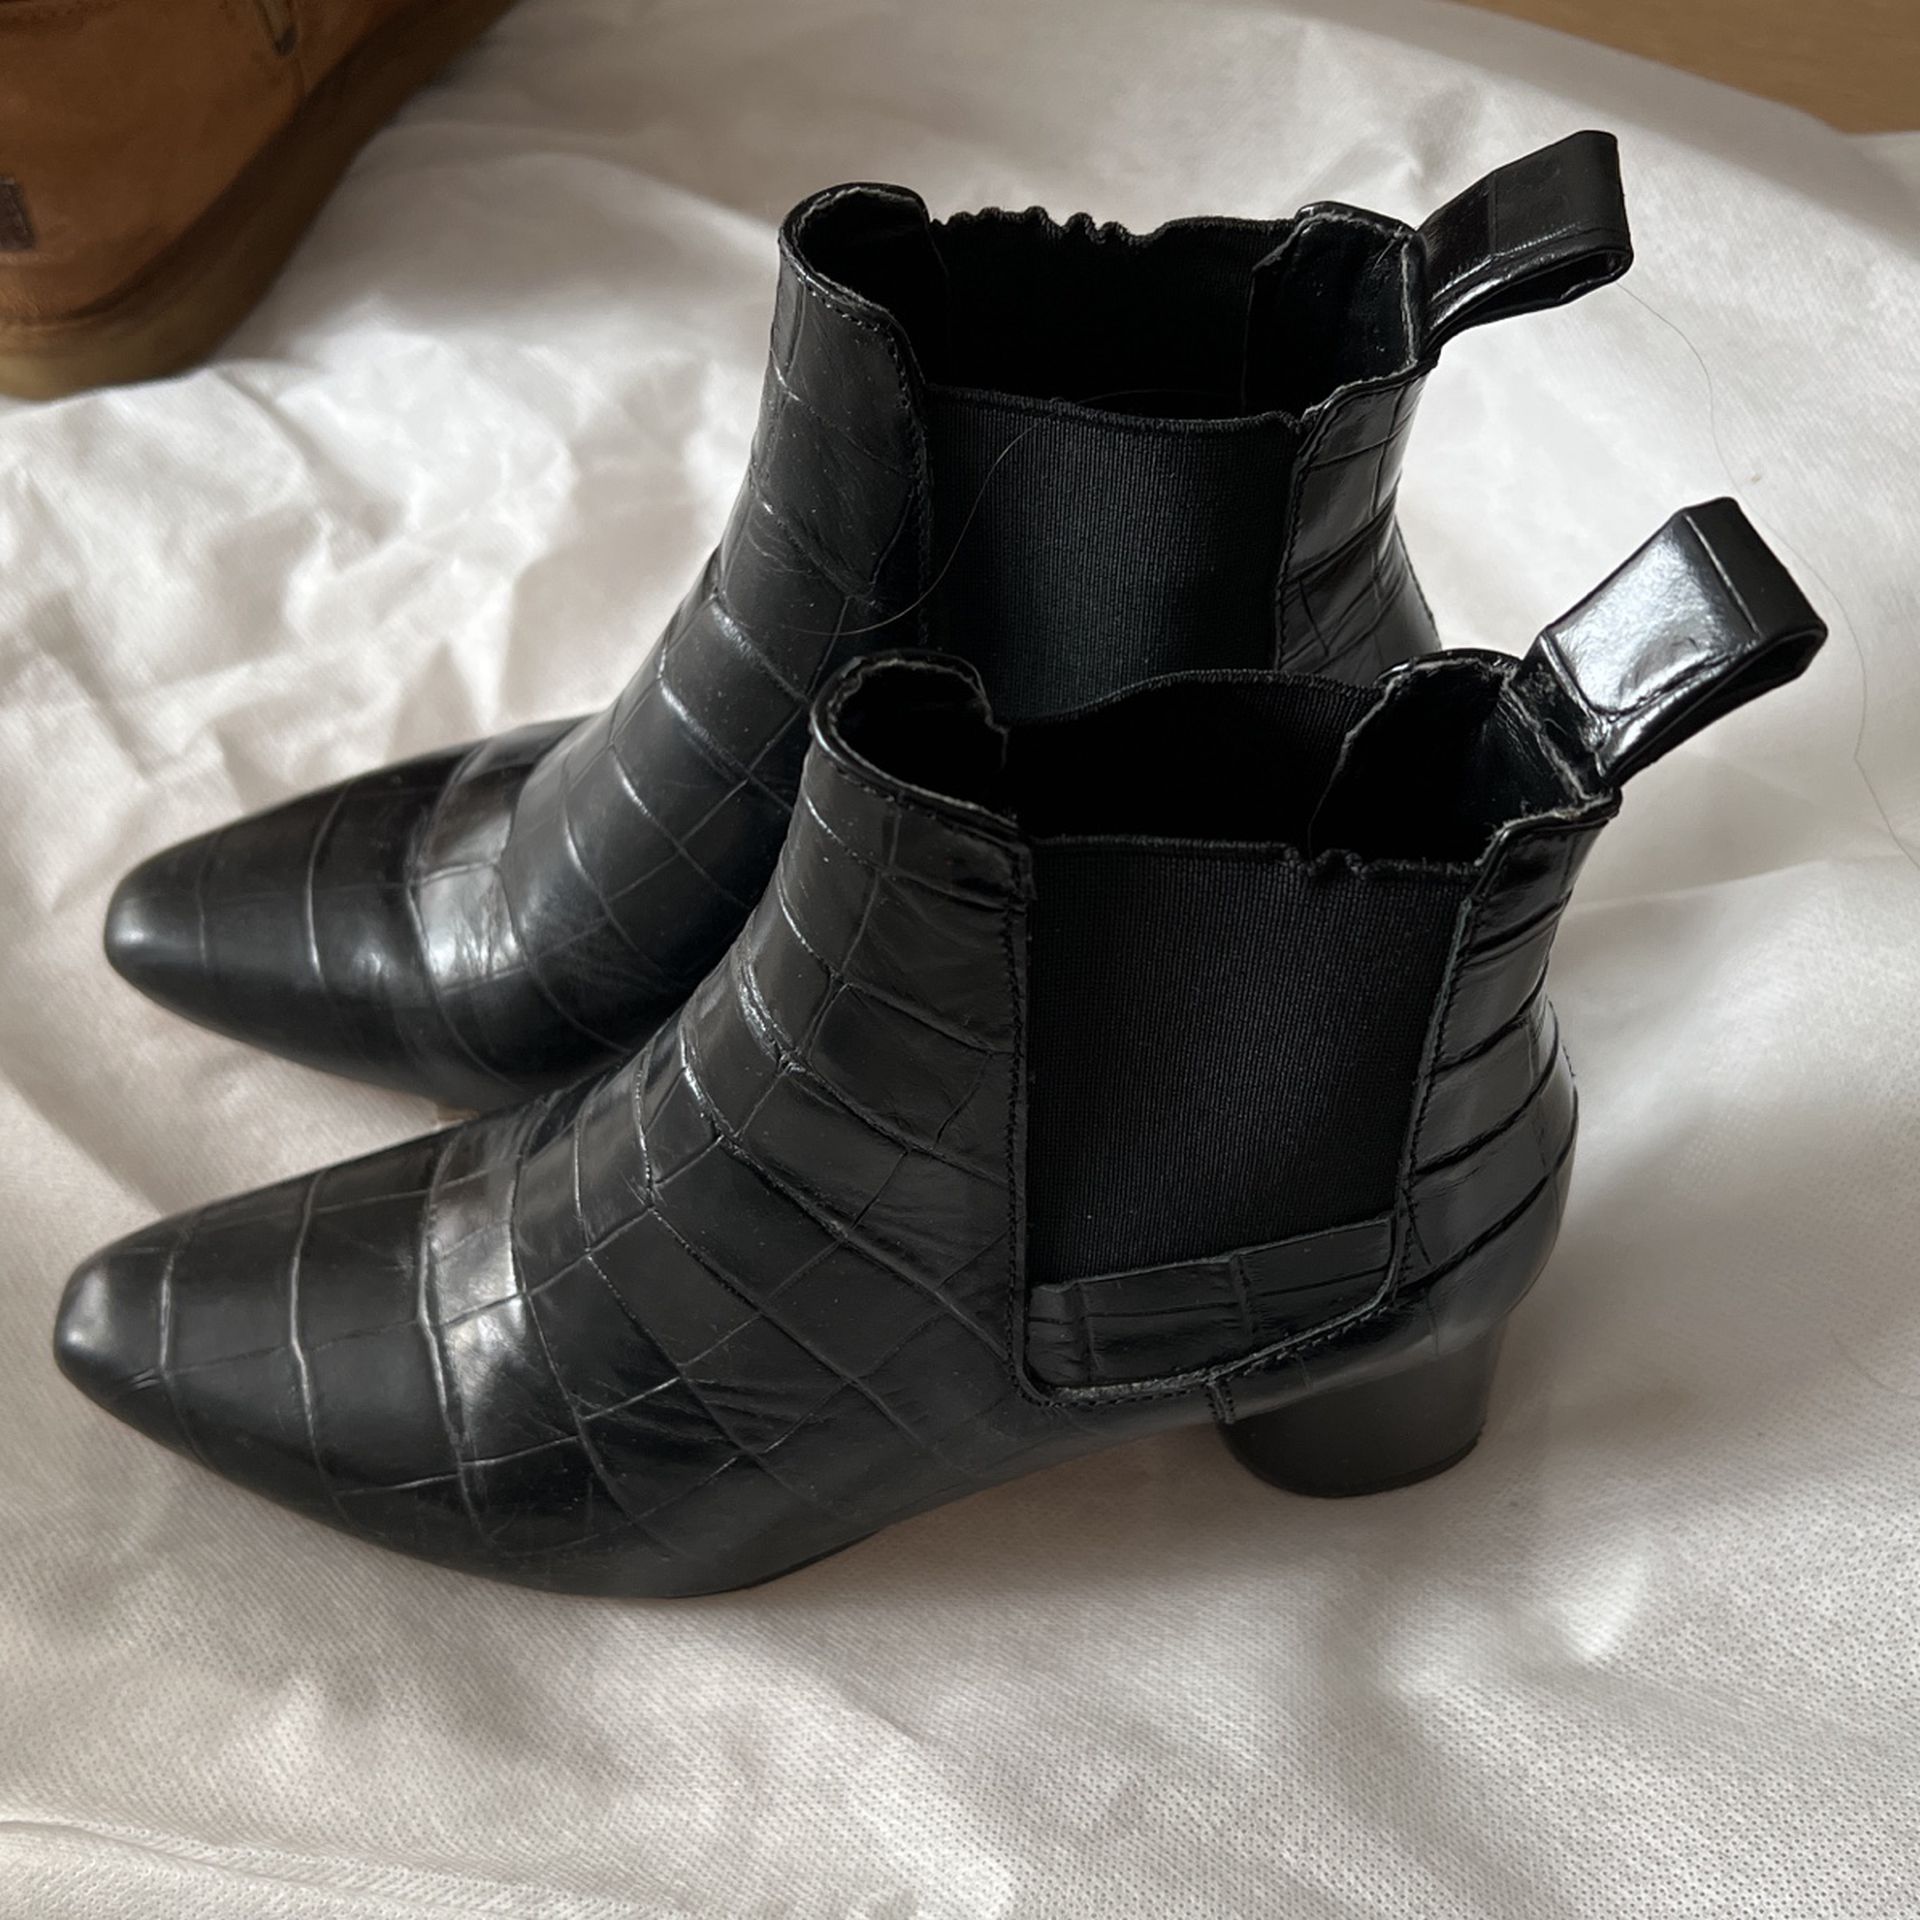 Zara Leather Booties -Free